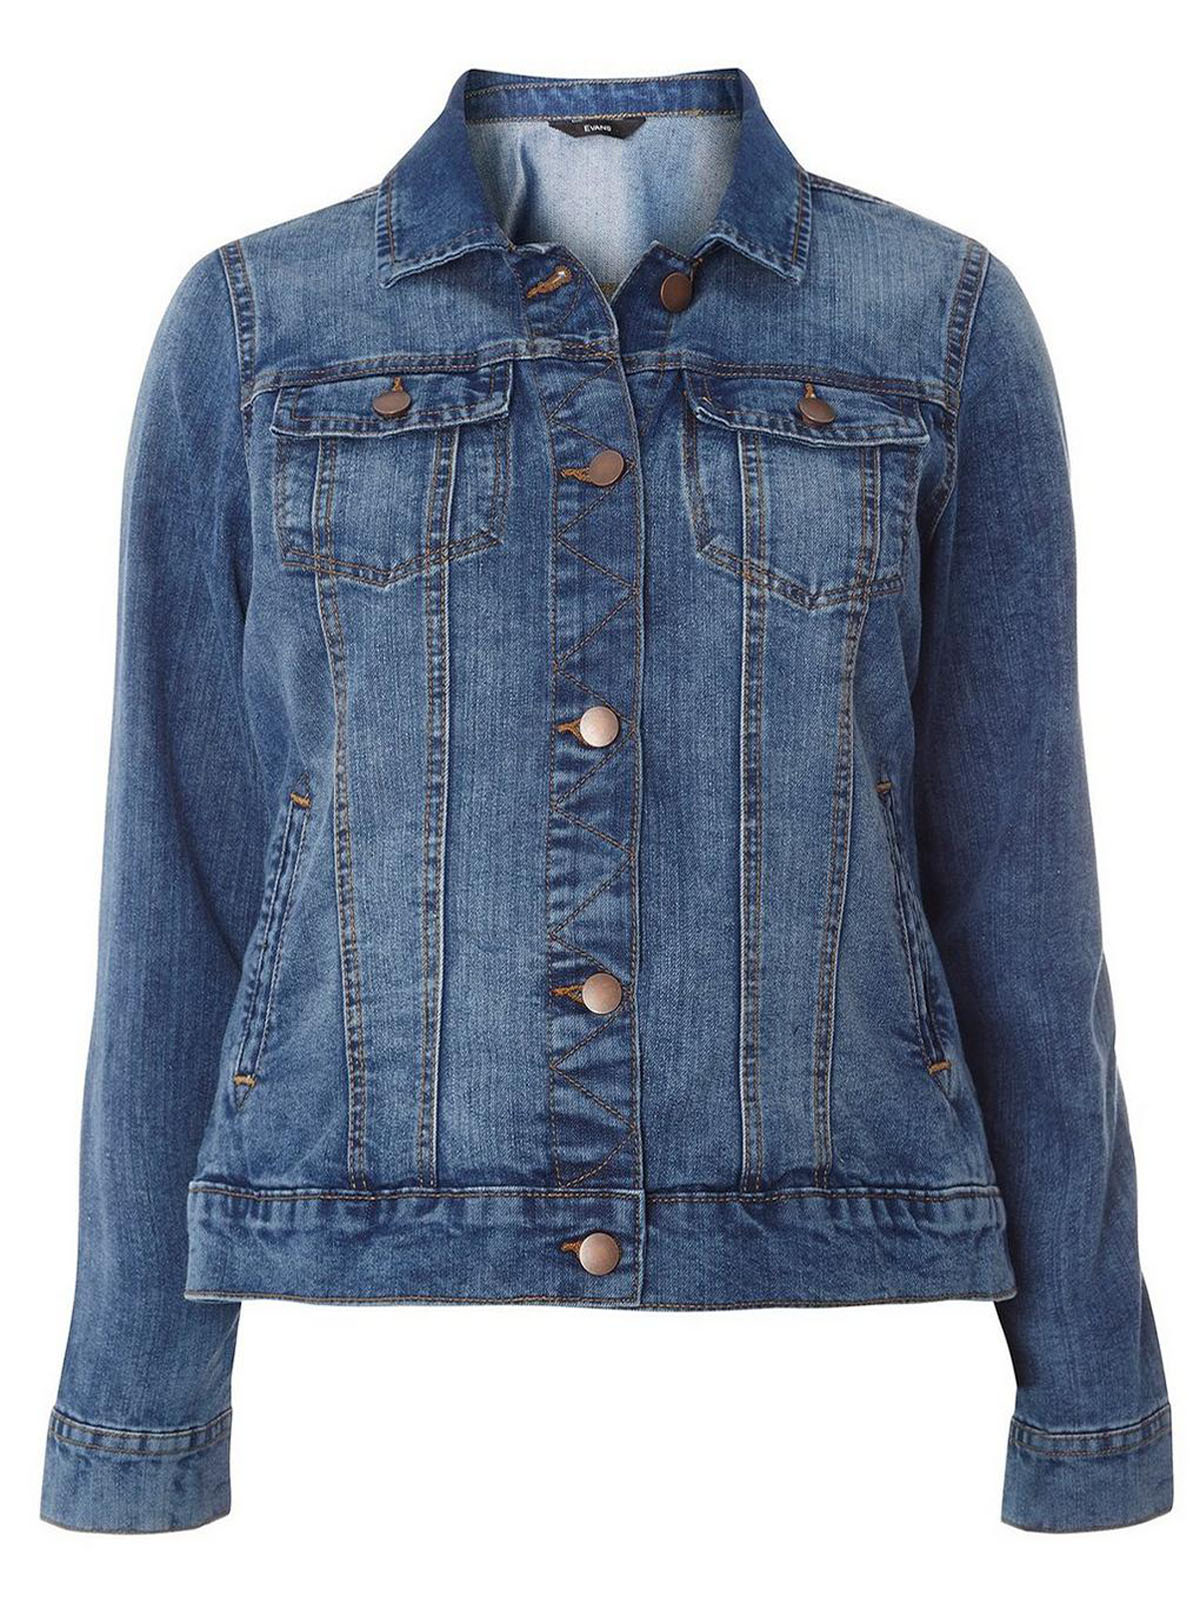 3vans DENIM BLUE Long Sleeve Short Denim Jacket - Plus Size 14 to 32